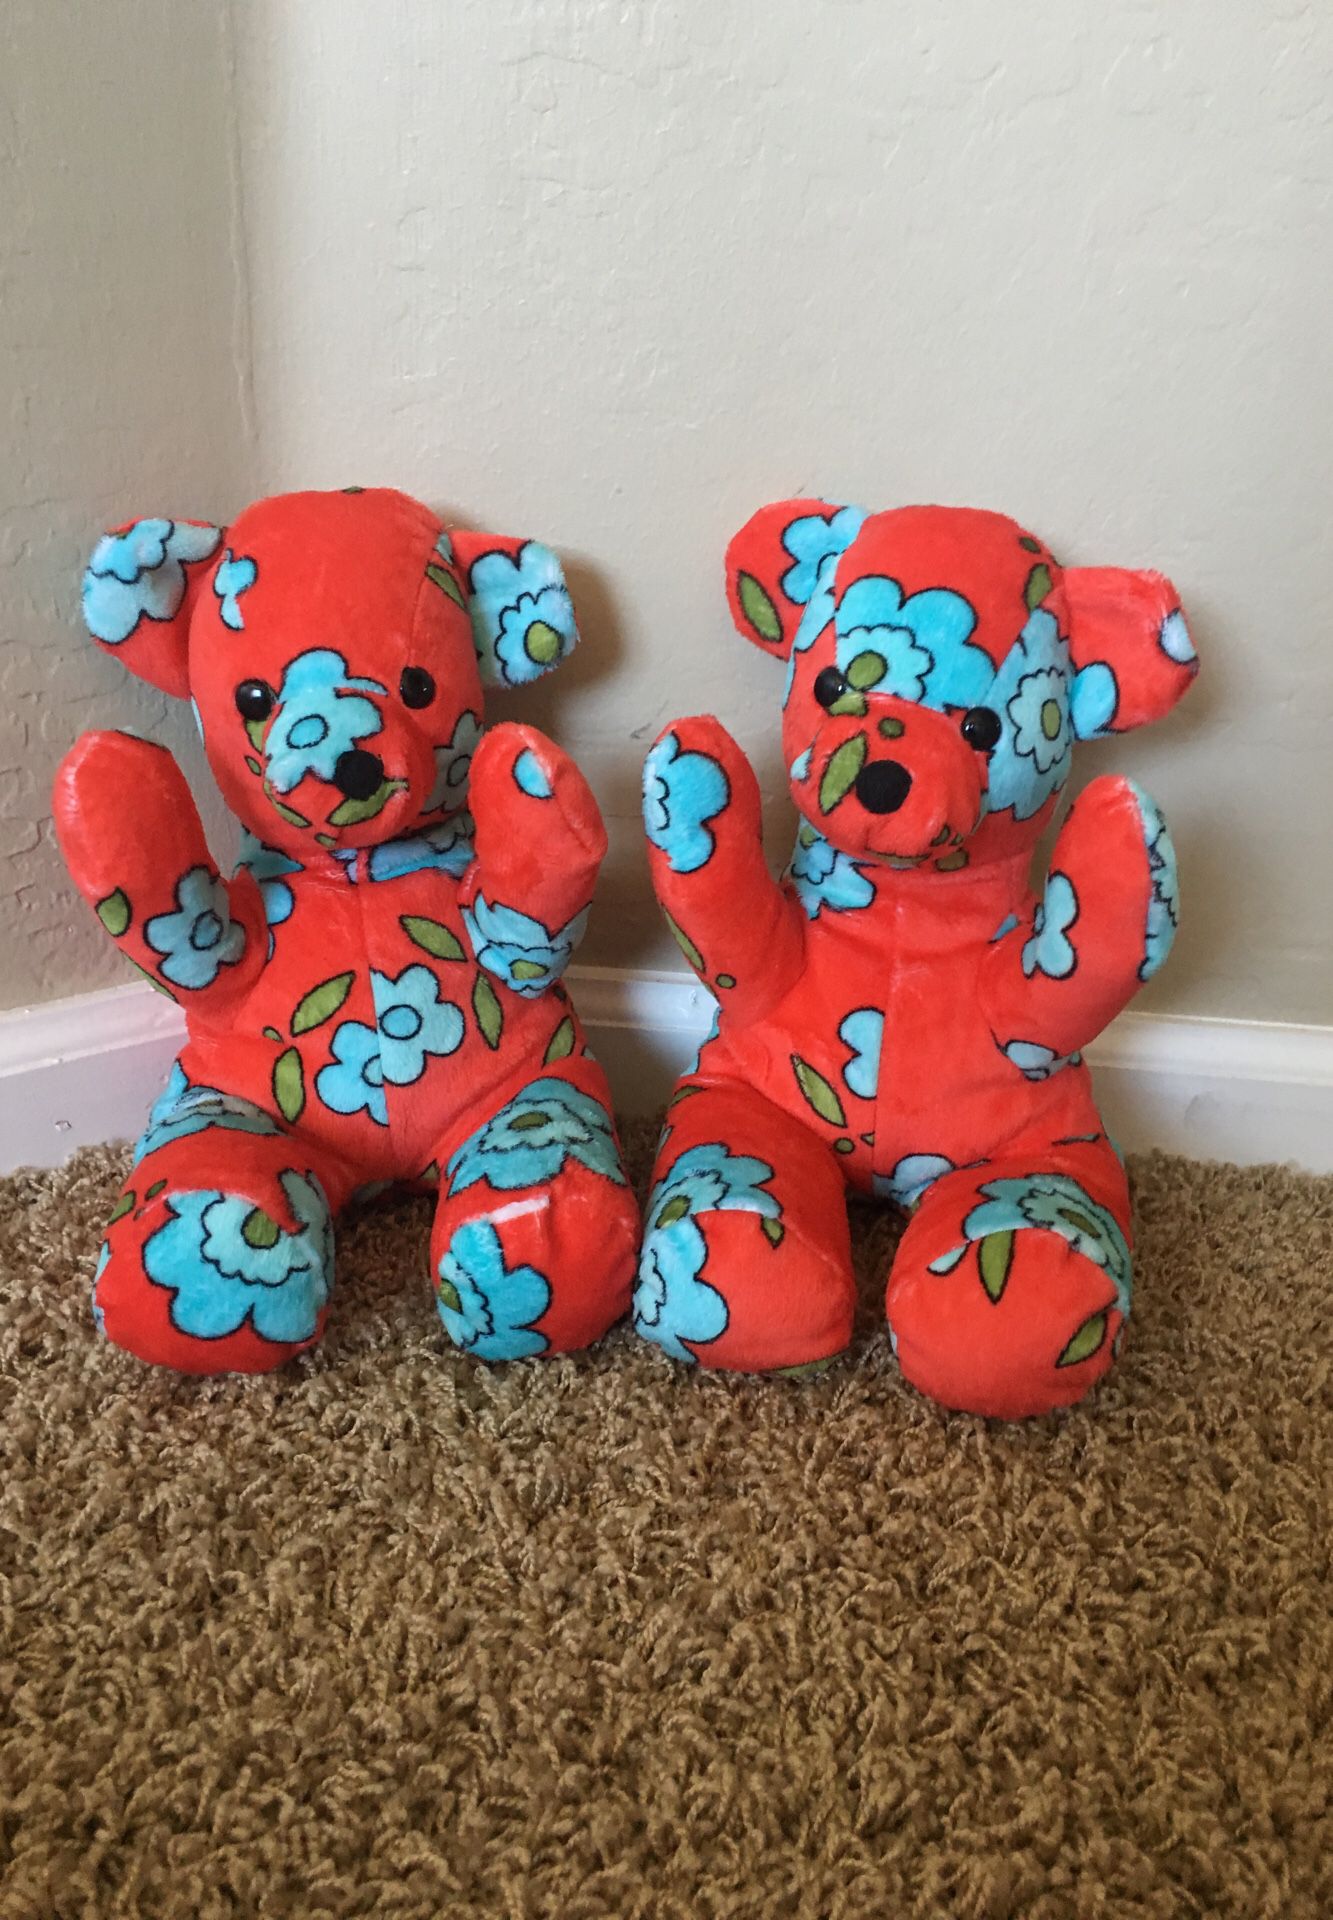 Bear Stuffed Animals